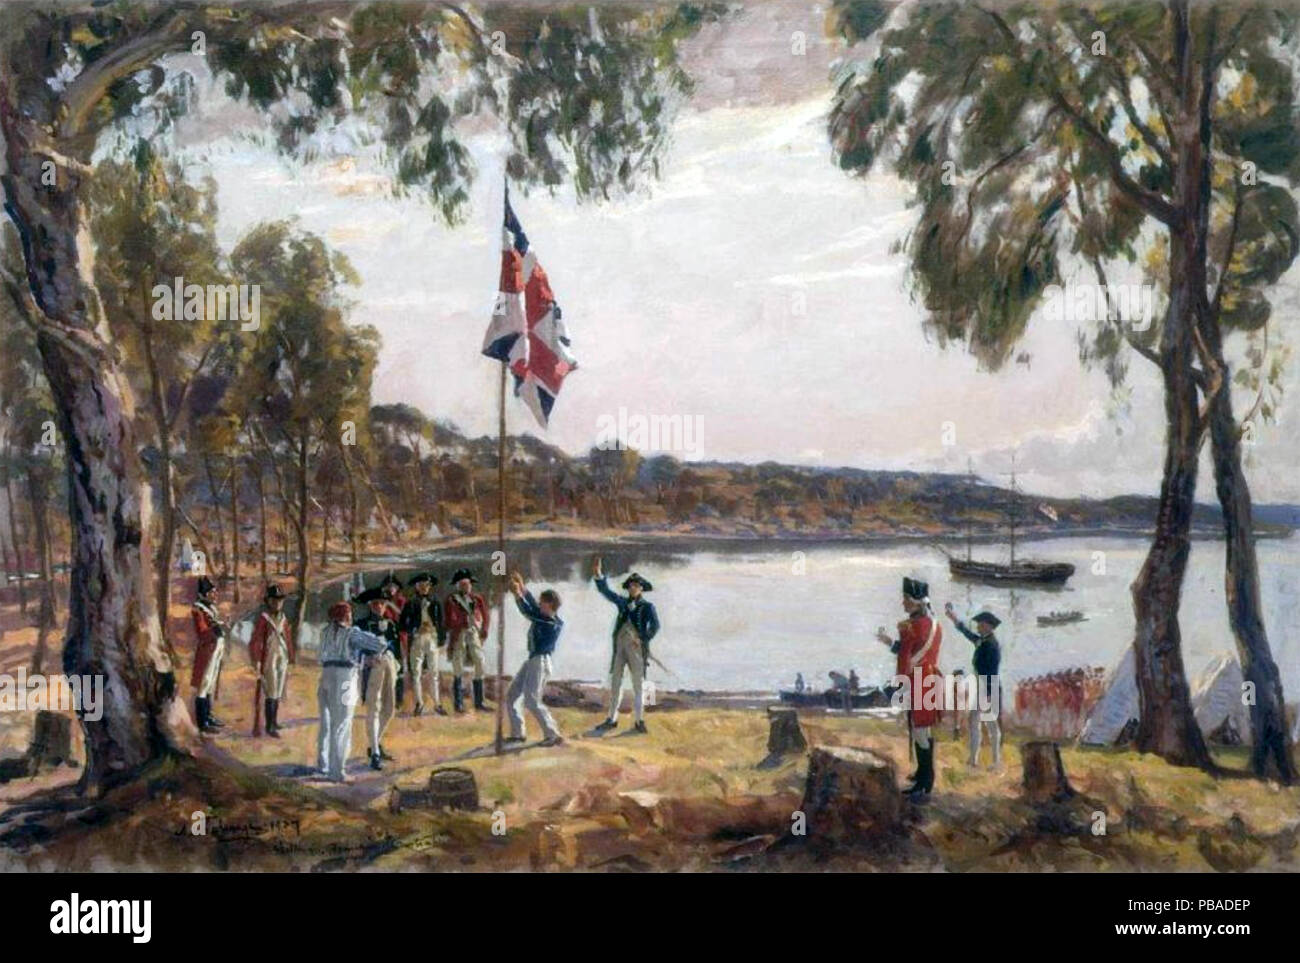 ARTHUR PHILLIP (1736-1814) Commander of the First Fleet, raises the flag at Sydney Cove,Port Jackson, 26 January 1788,establishing the first penal colony in Australia. Stock Photo